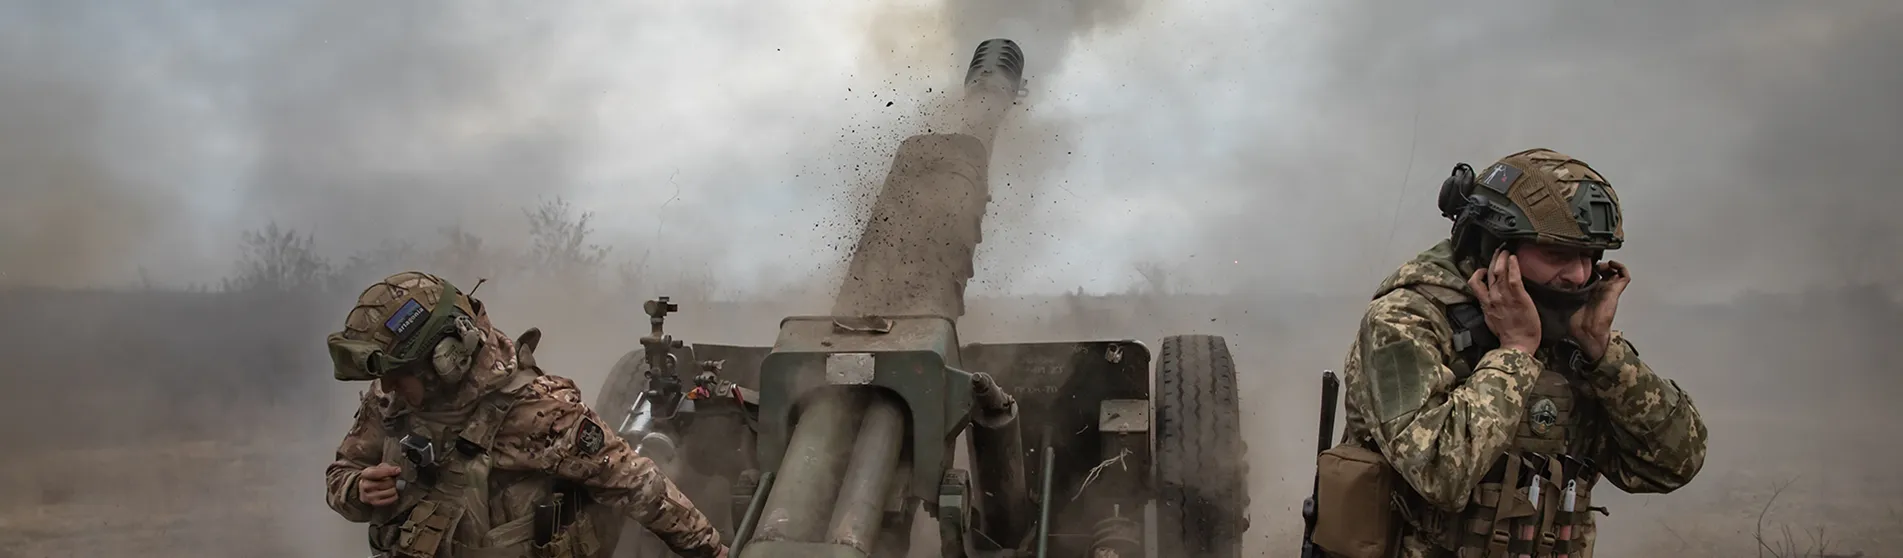 War in Ukraine (Shutterstock, editorial use only)